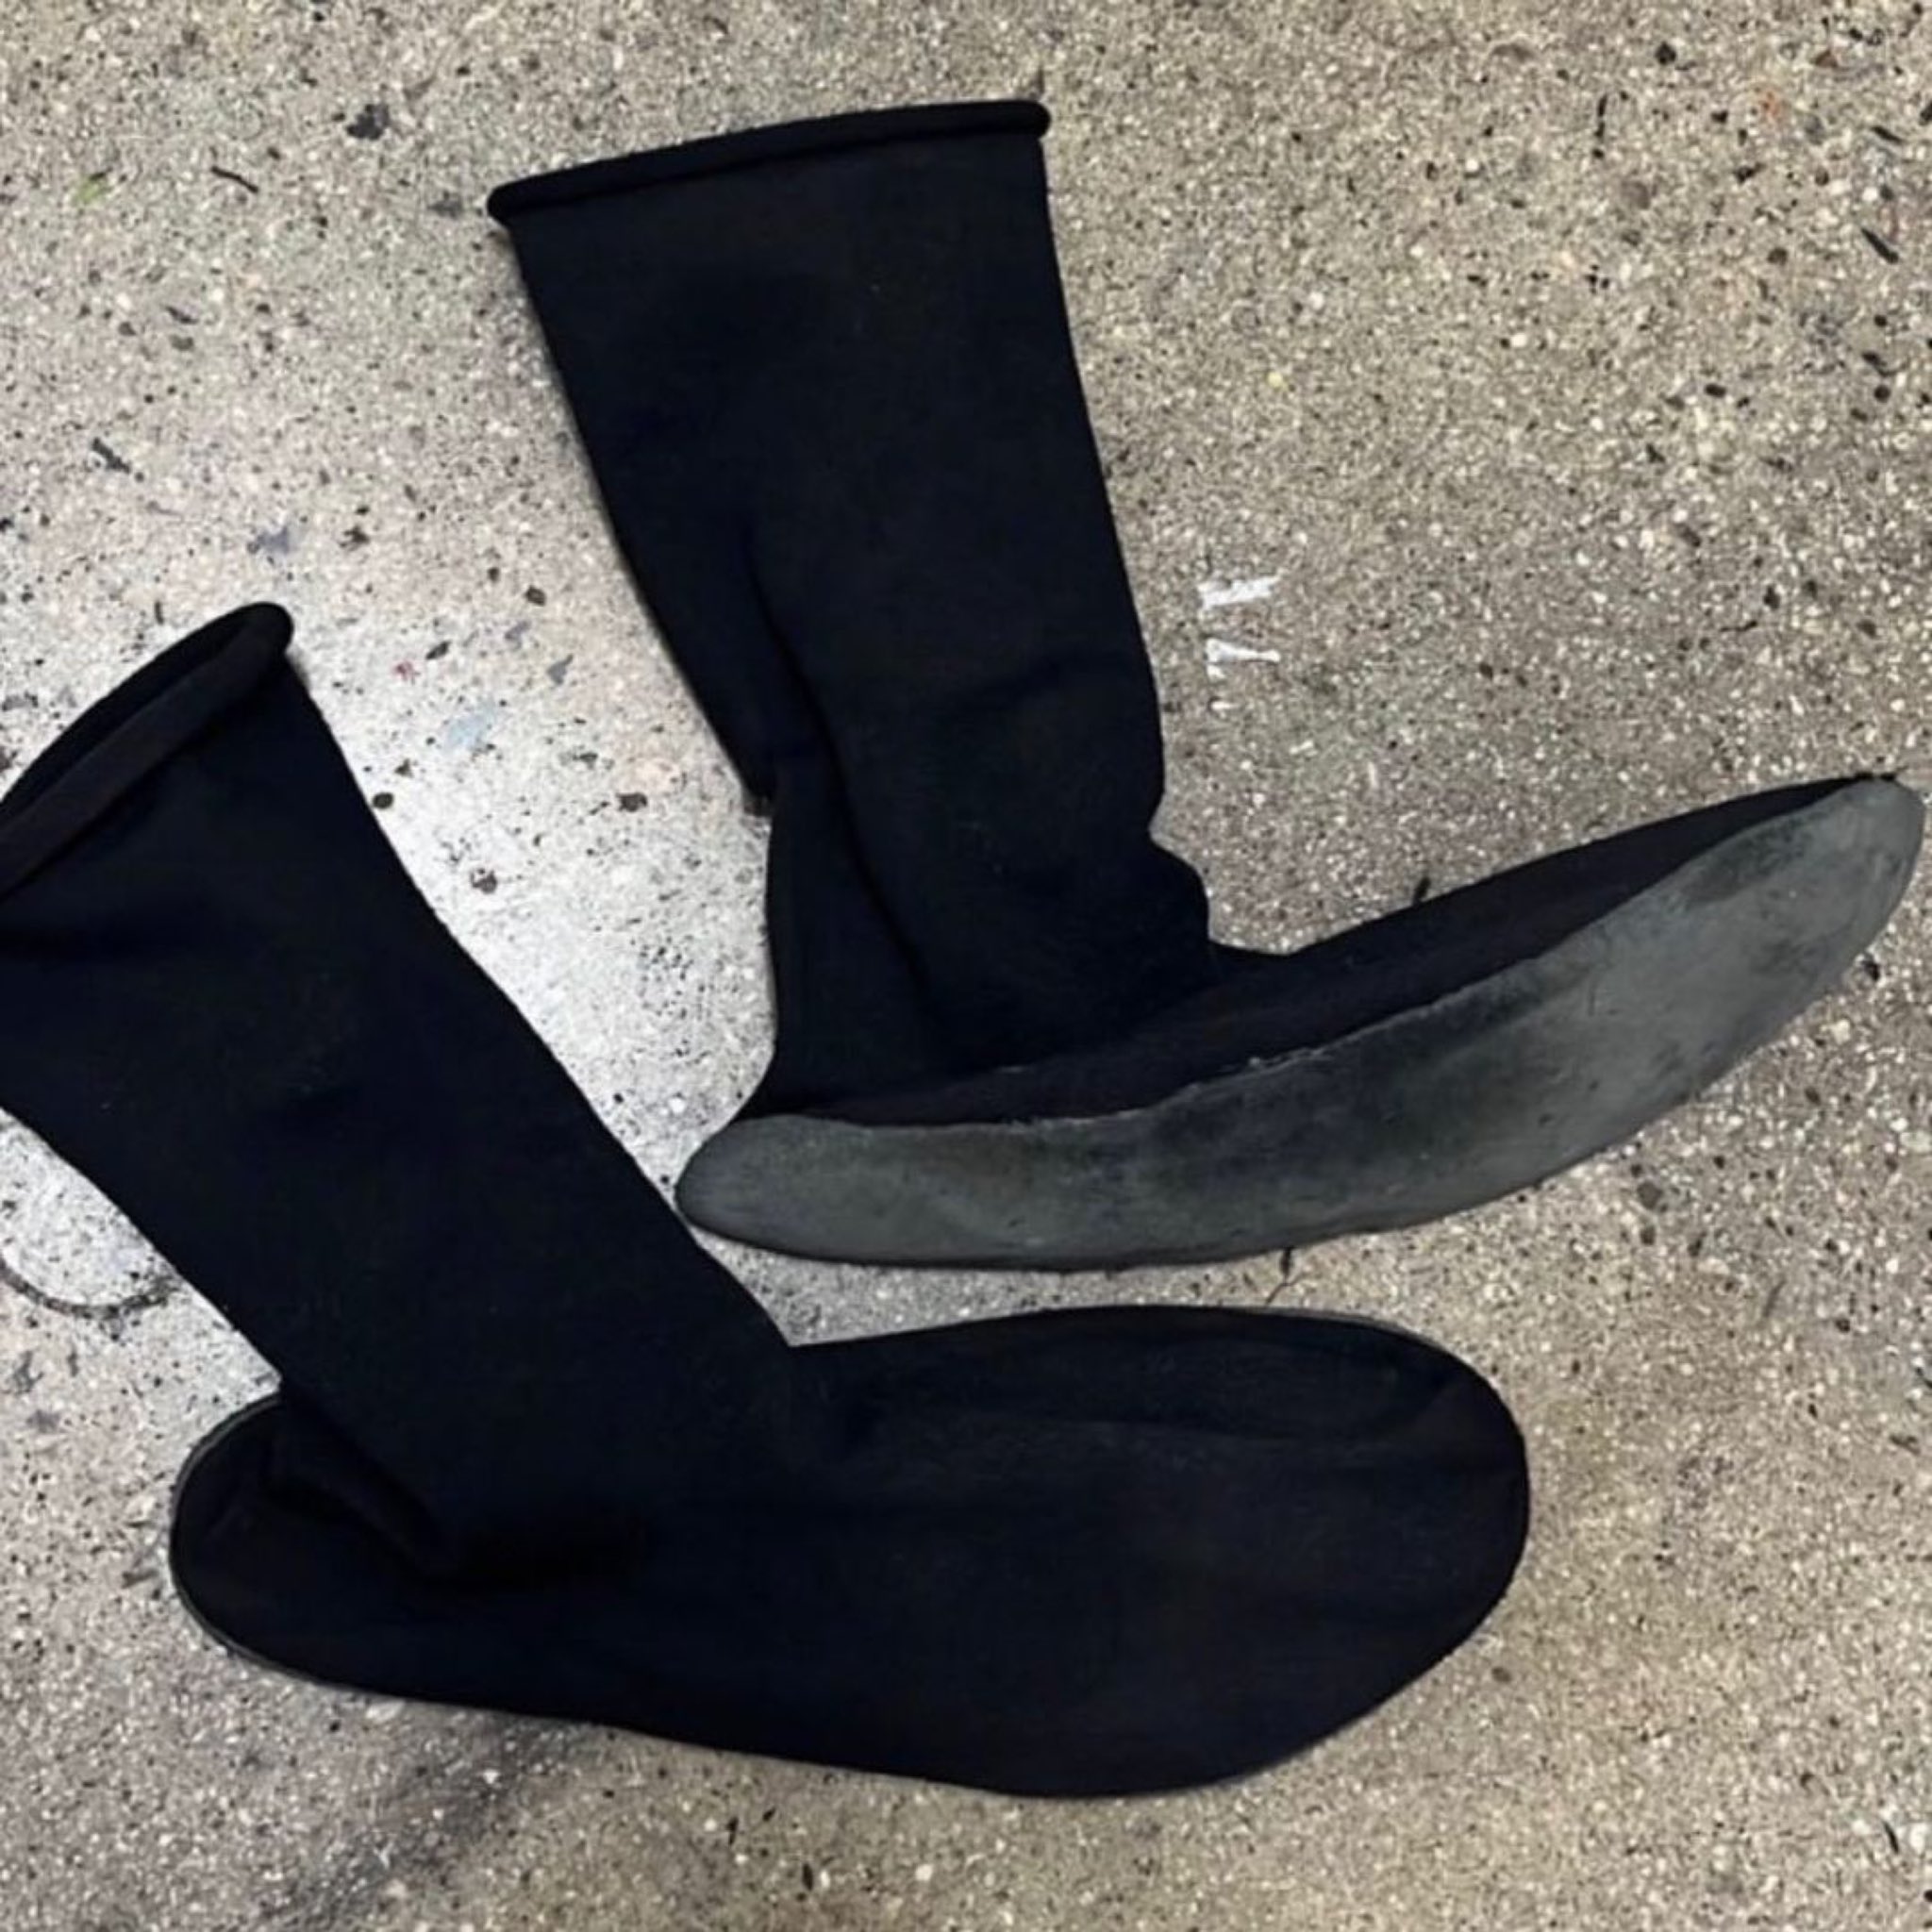 YEEZY MAFIA on X: First look at a Yzy Sock sneaker prototype